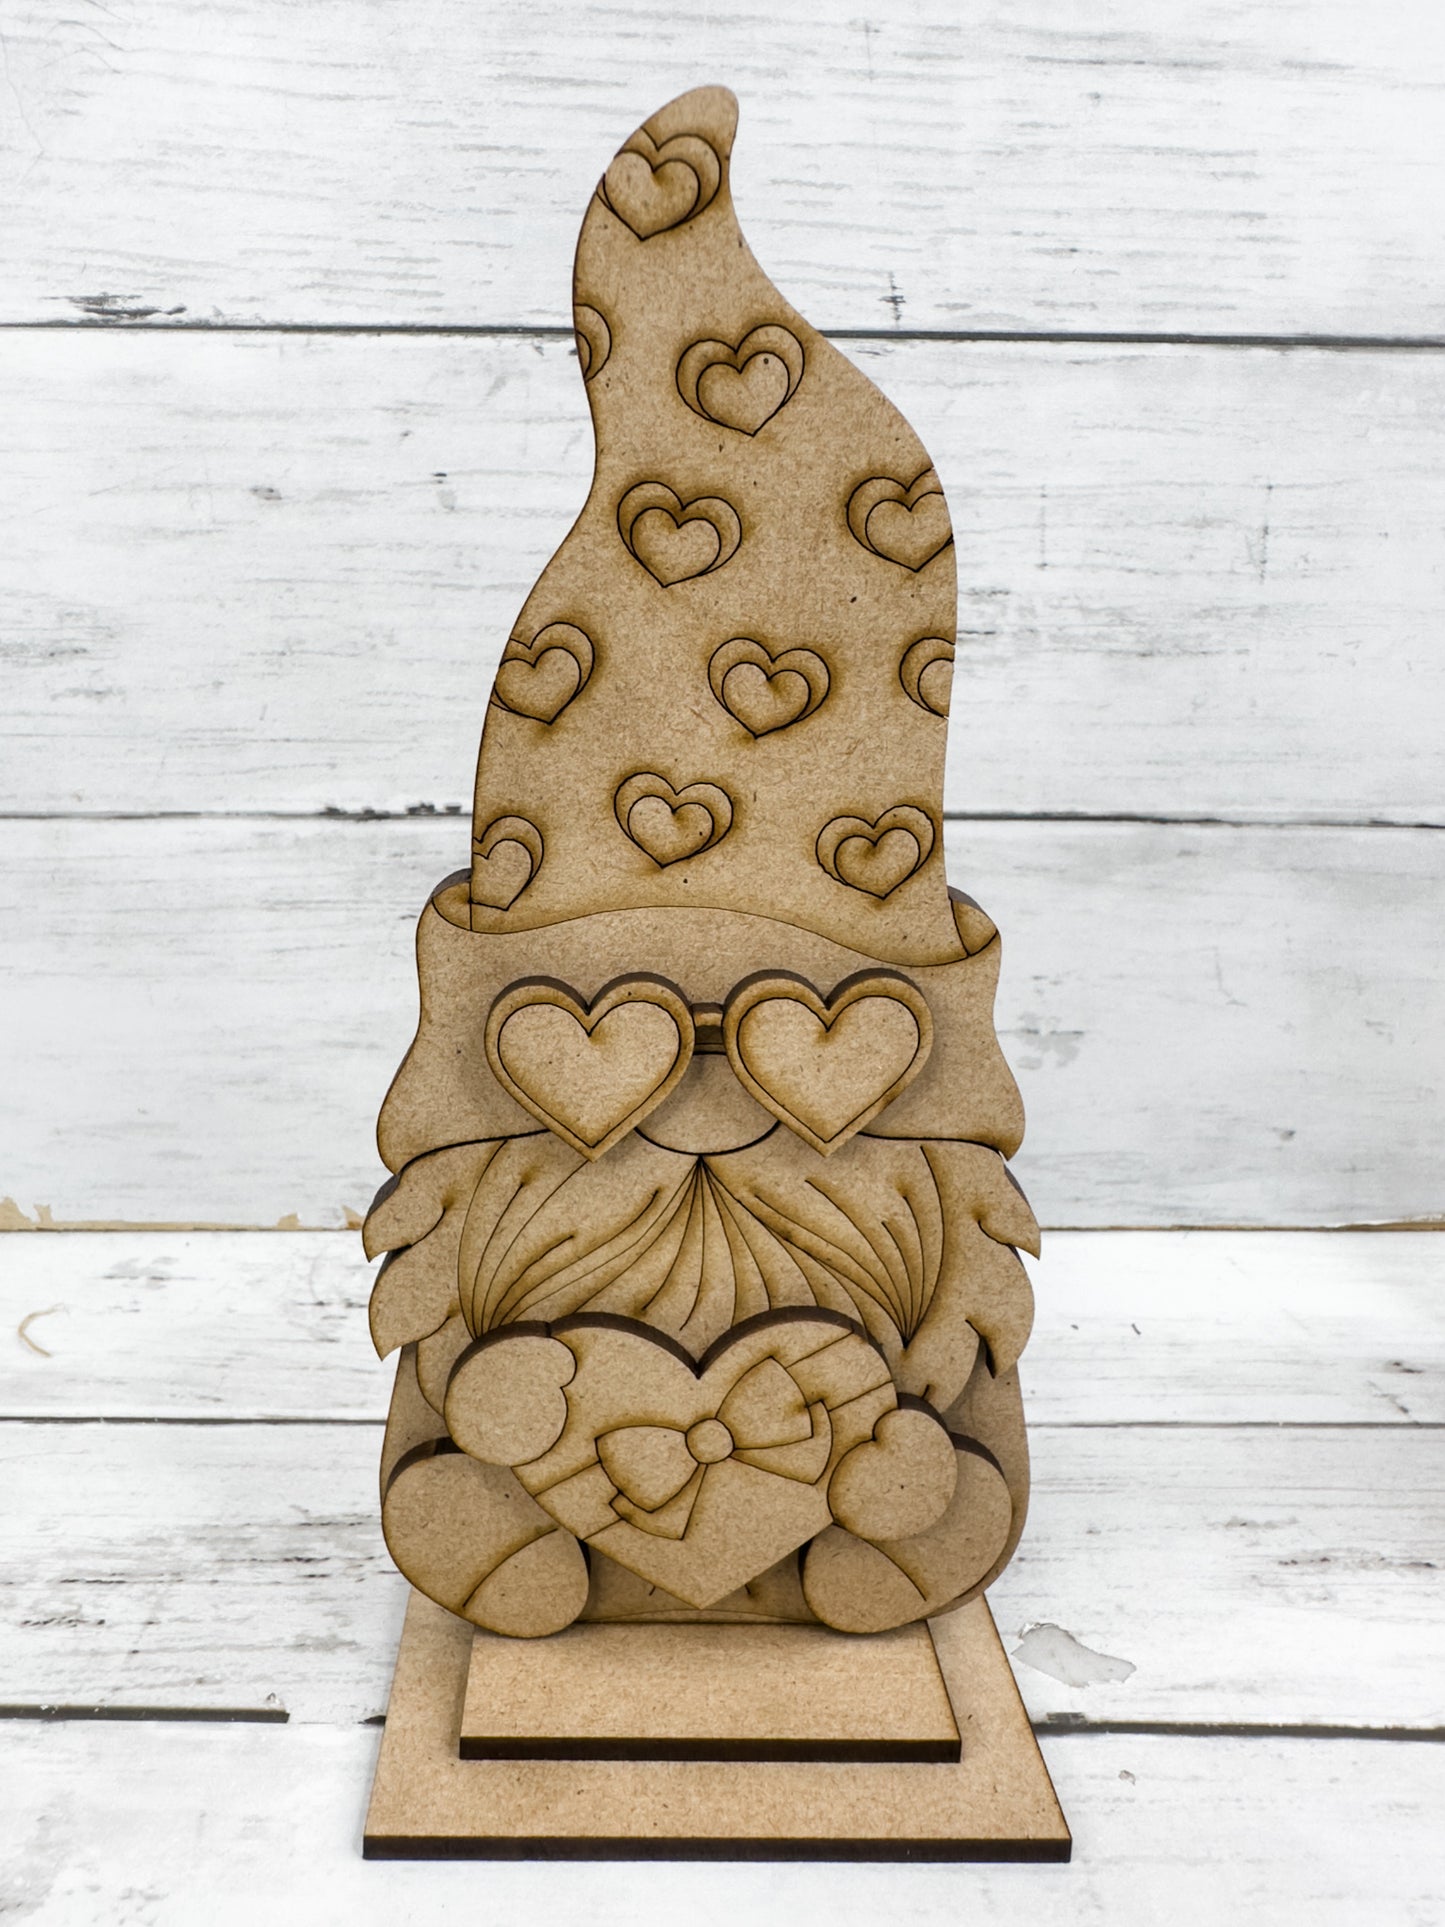 Adorable Valentine's Gnome Couple DIY Kit